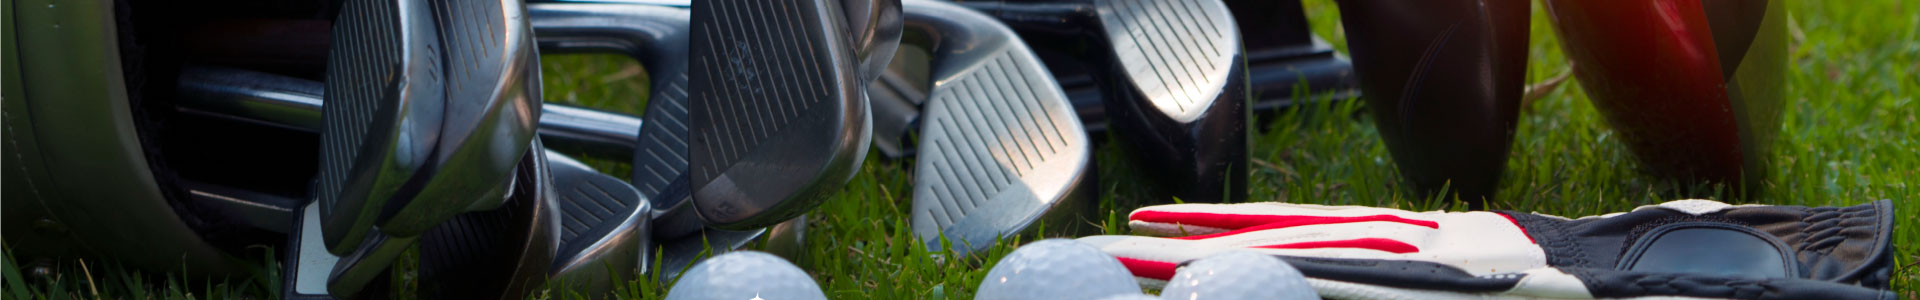 Golf Tournaments at Uplink